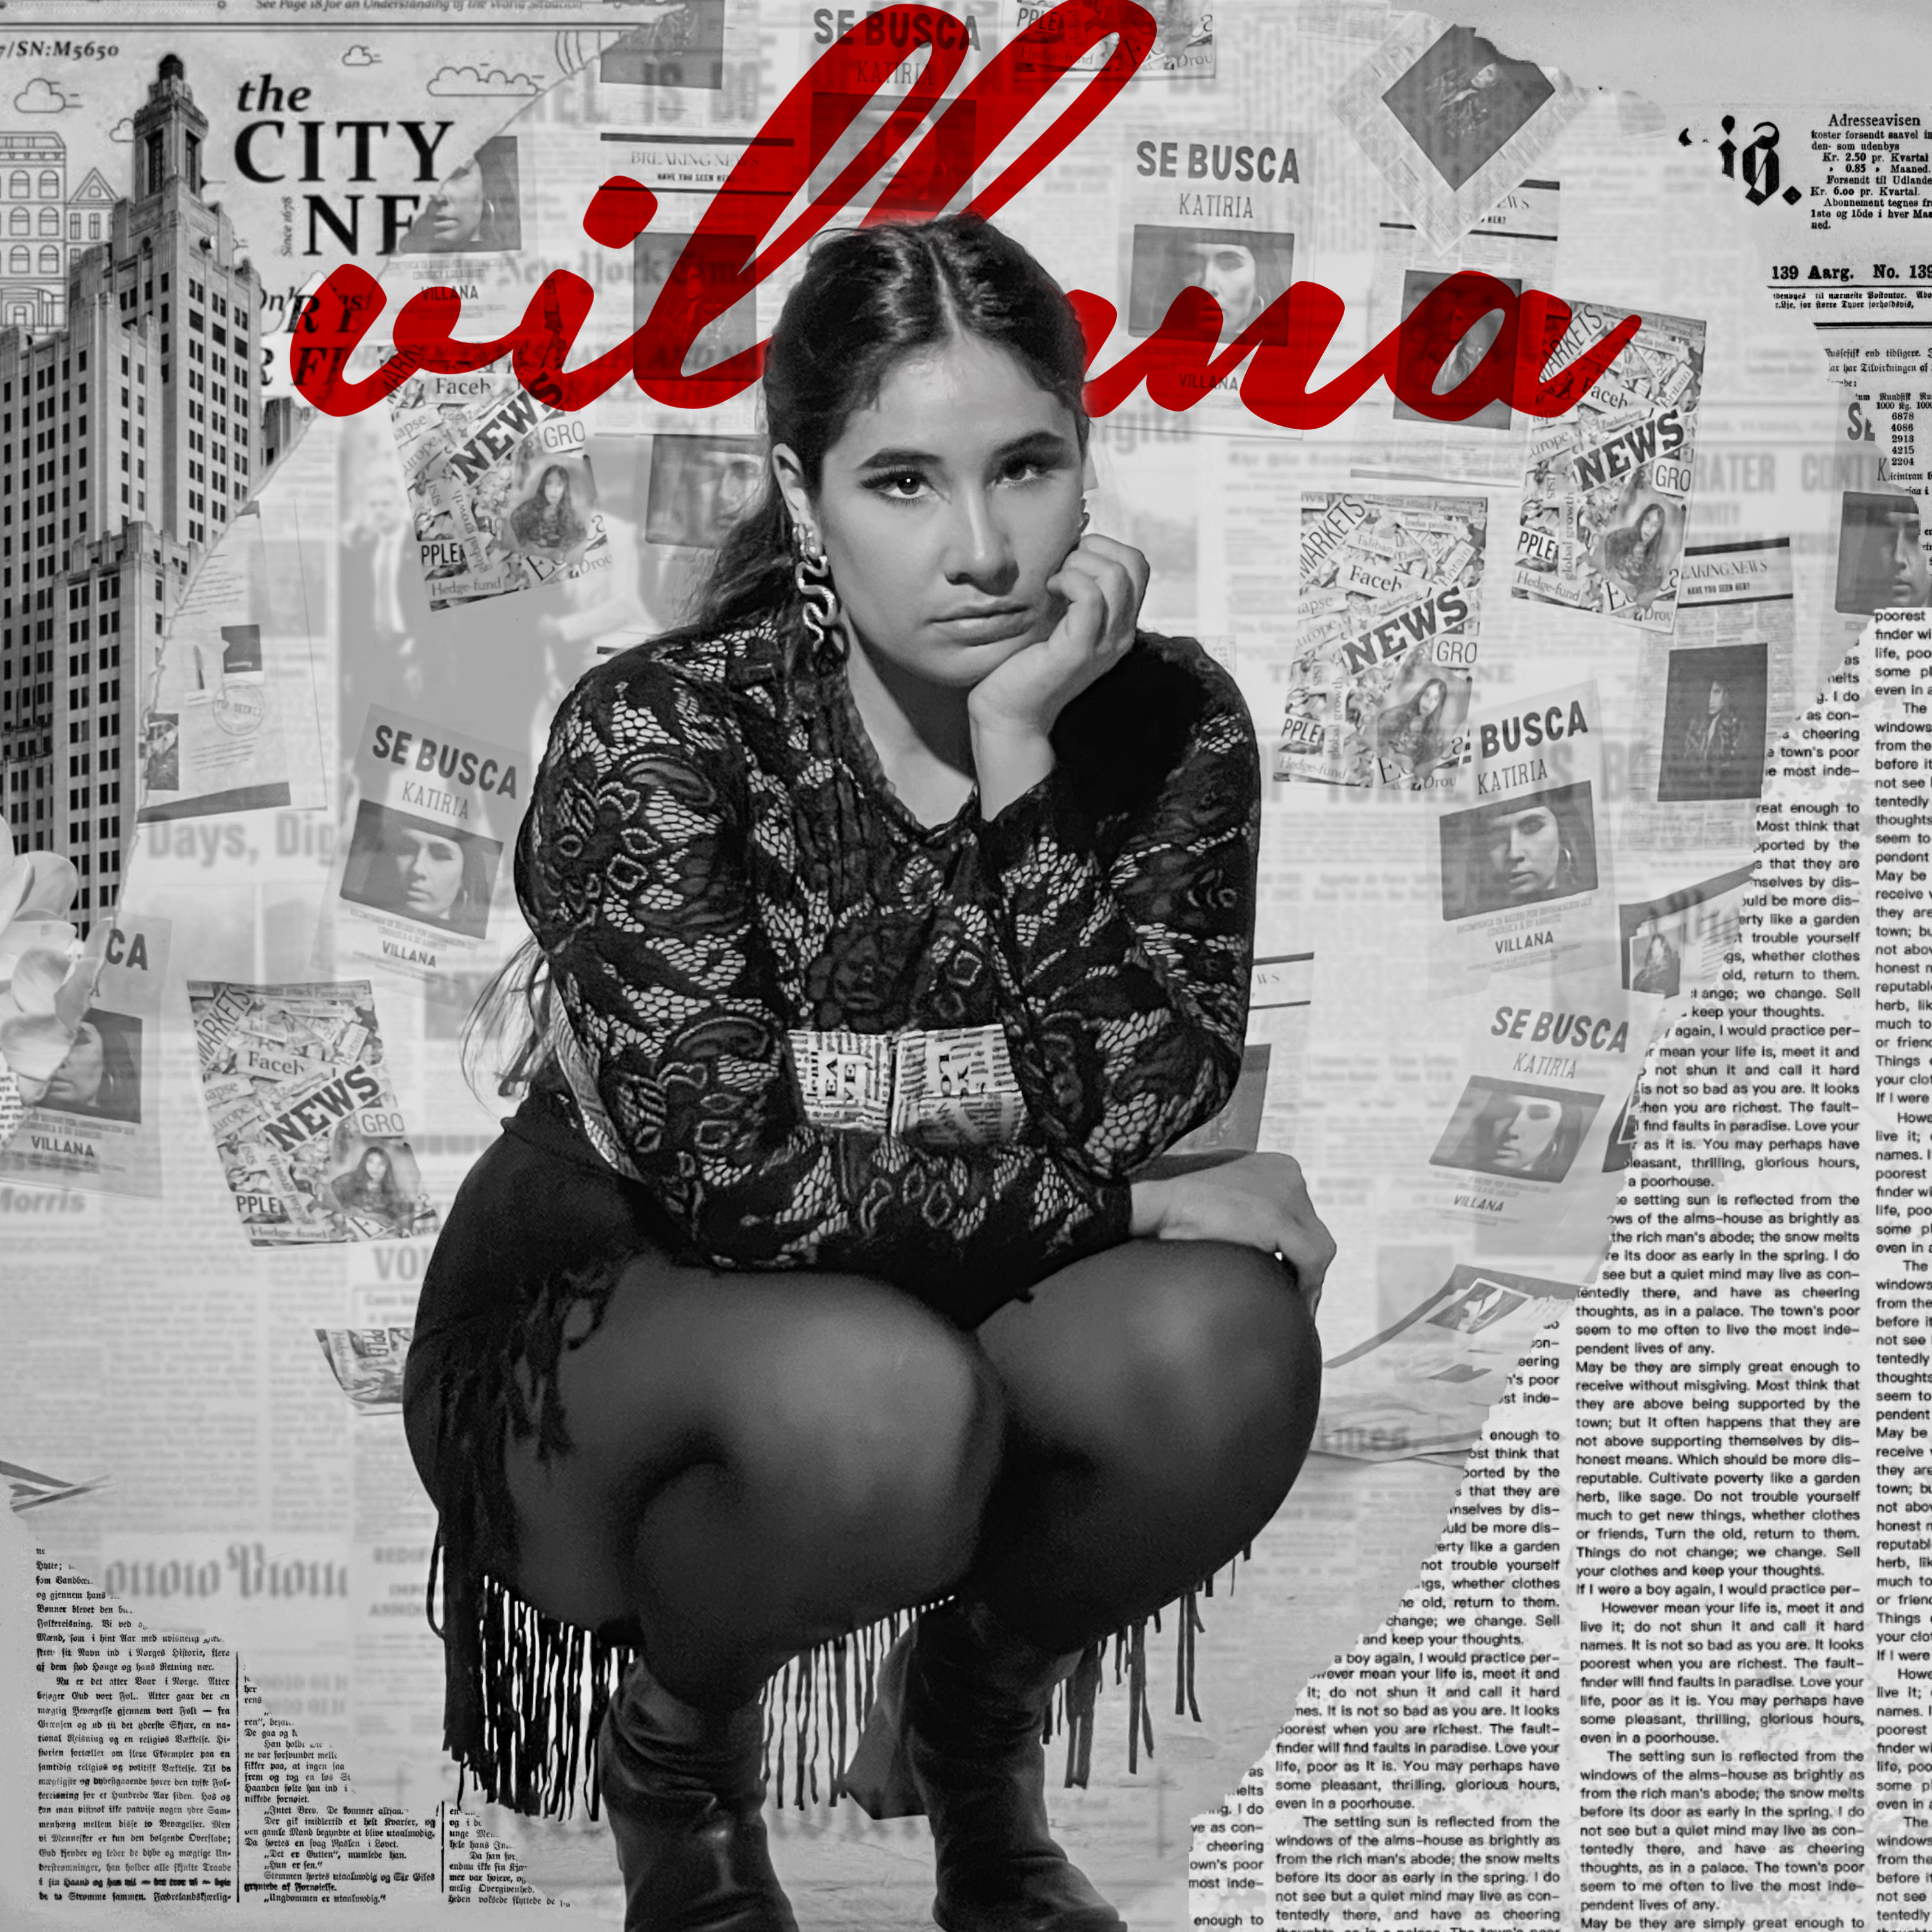 Latin Sensation Katiria Unleashes Fiery New Single Titled Villana